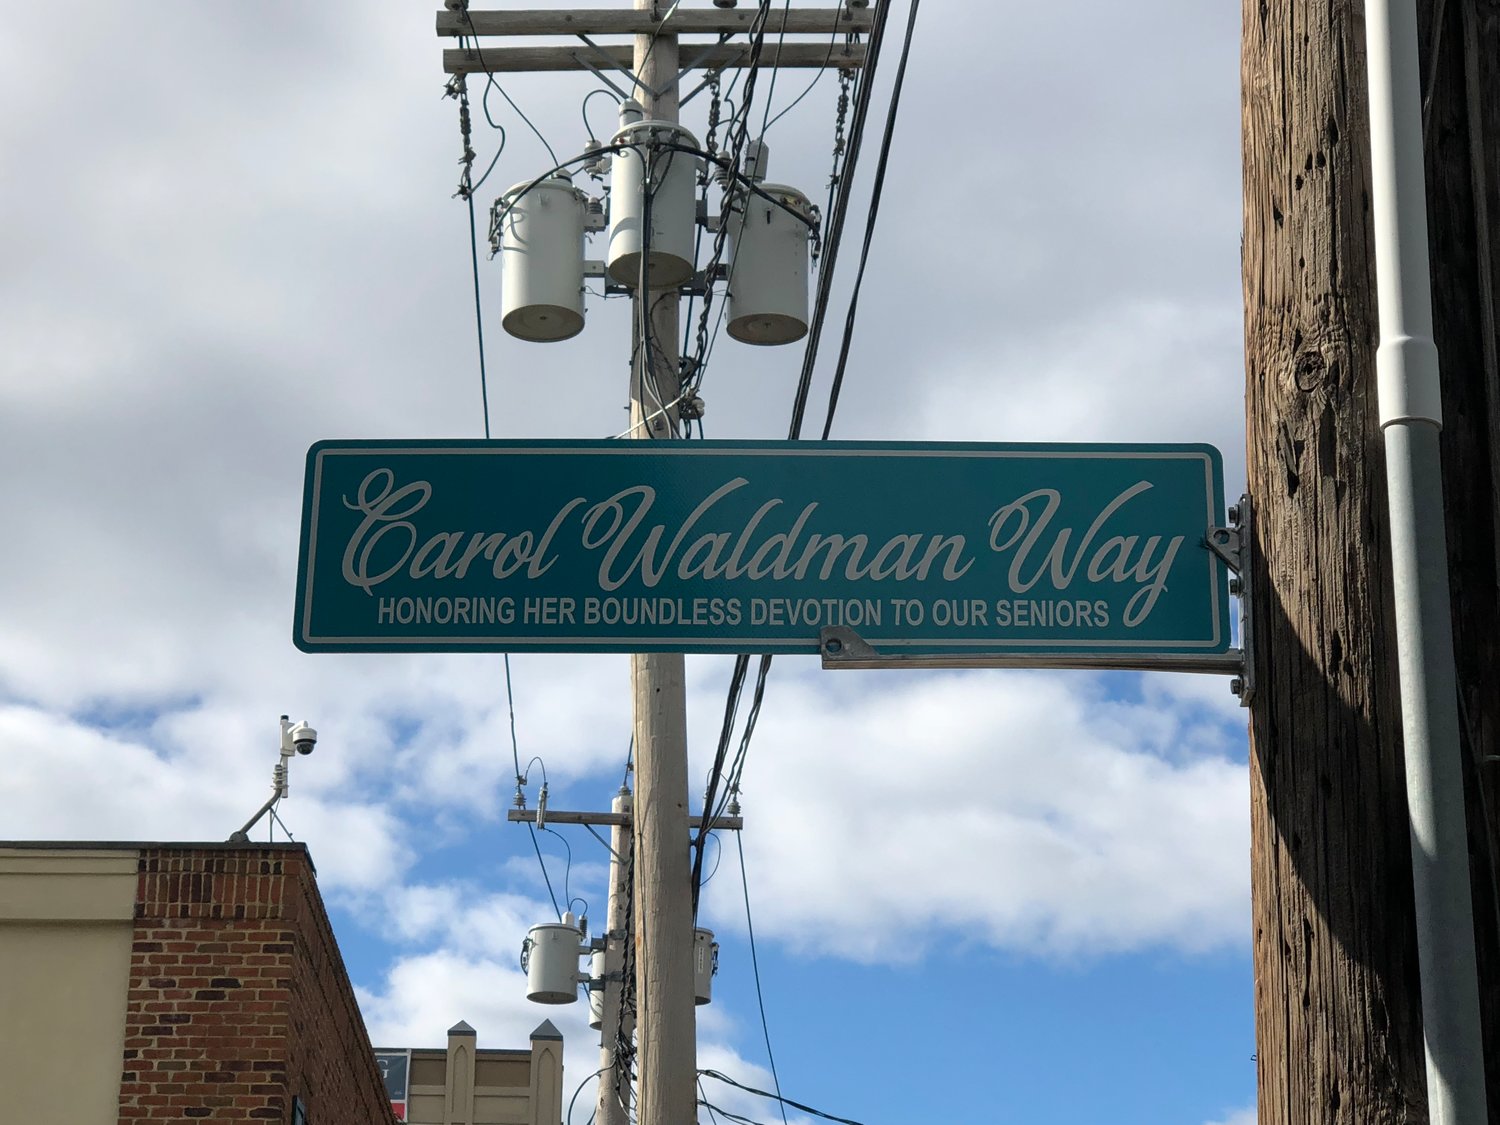 The City of Glen Cove has designated the road leading into the senior center as Carol Waldman Way.